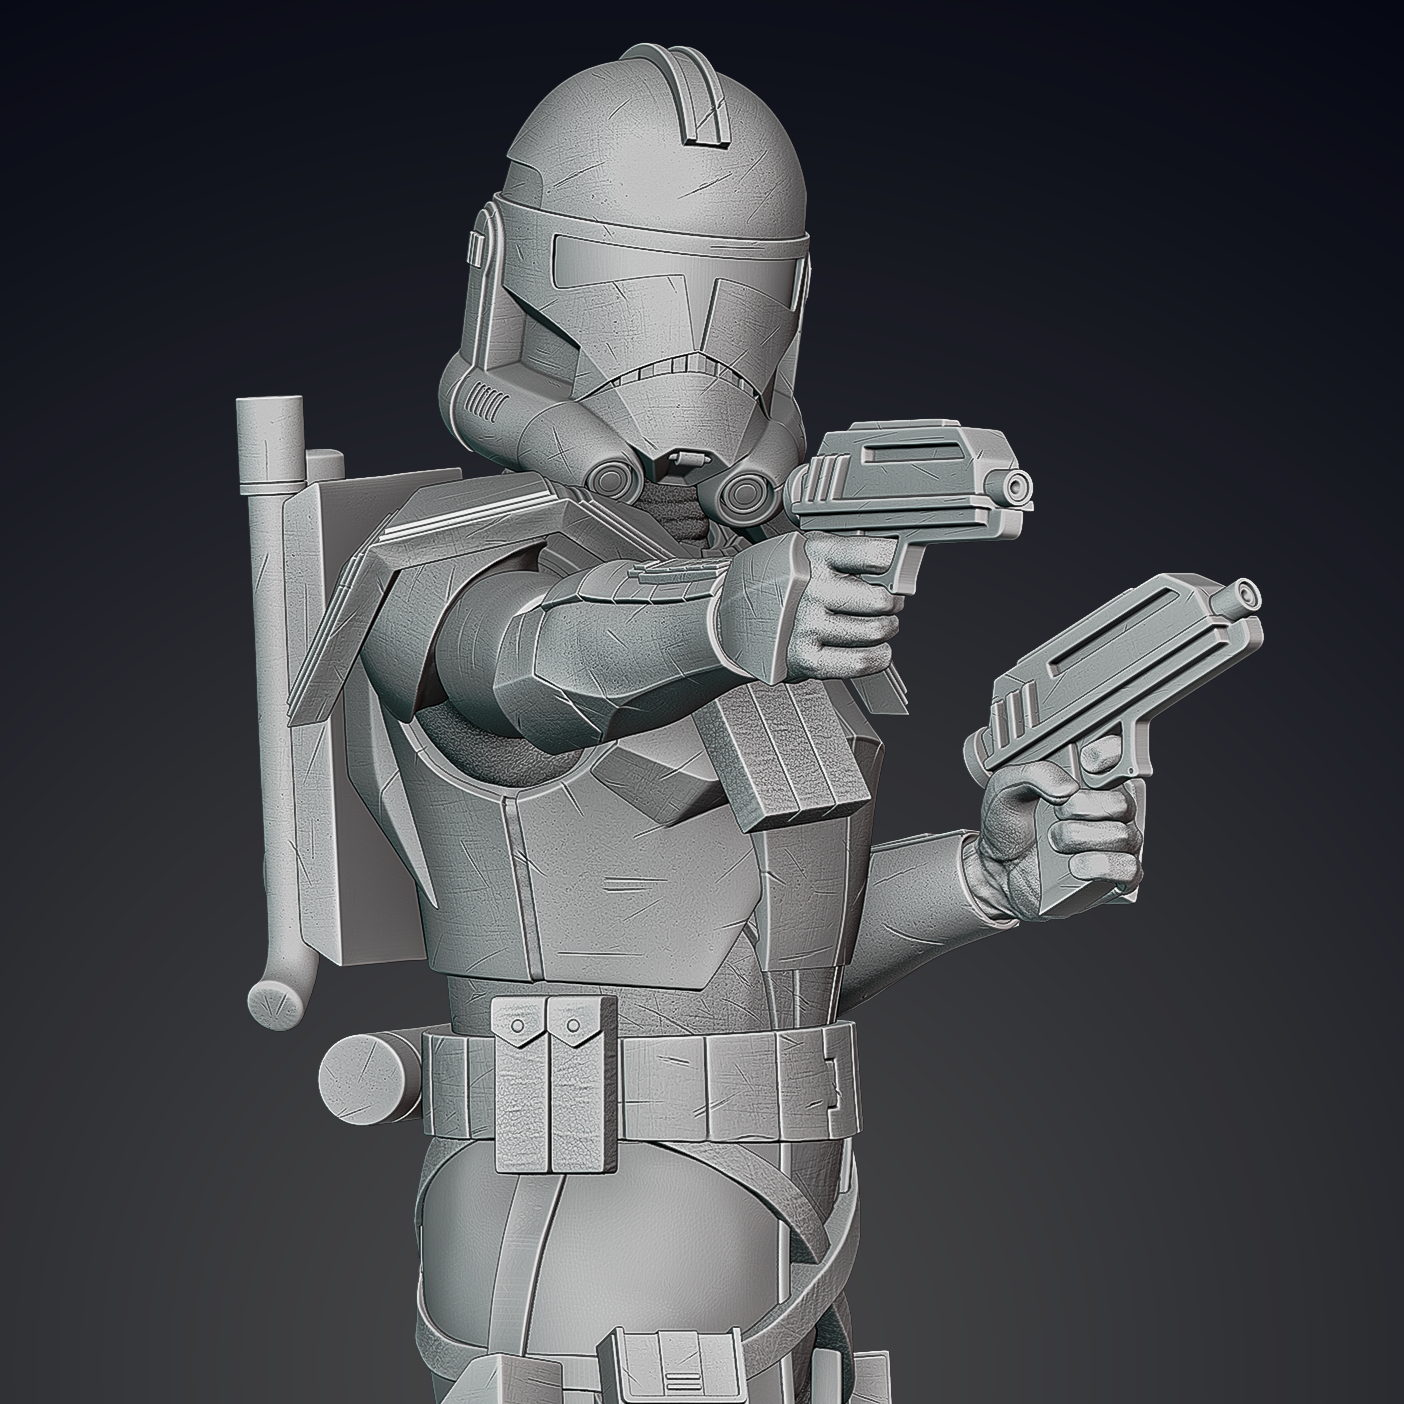 Animated ARC Trooper Figurine - Pose 2 - 3D Print Files